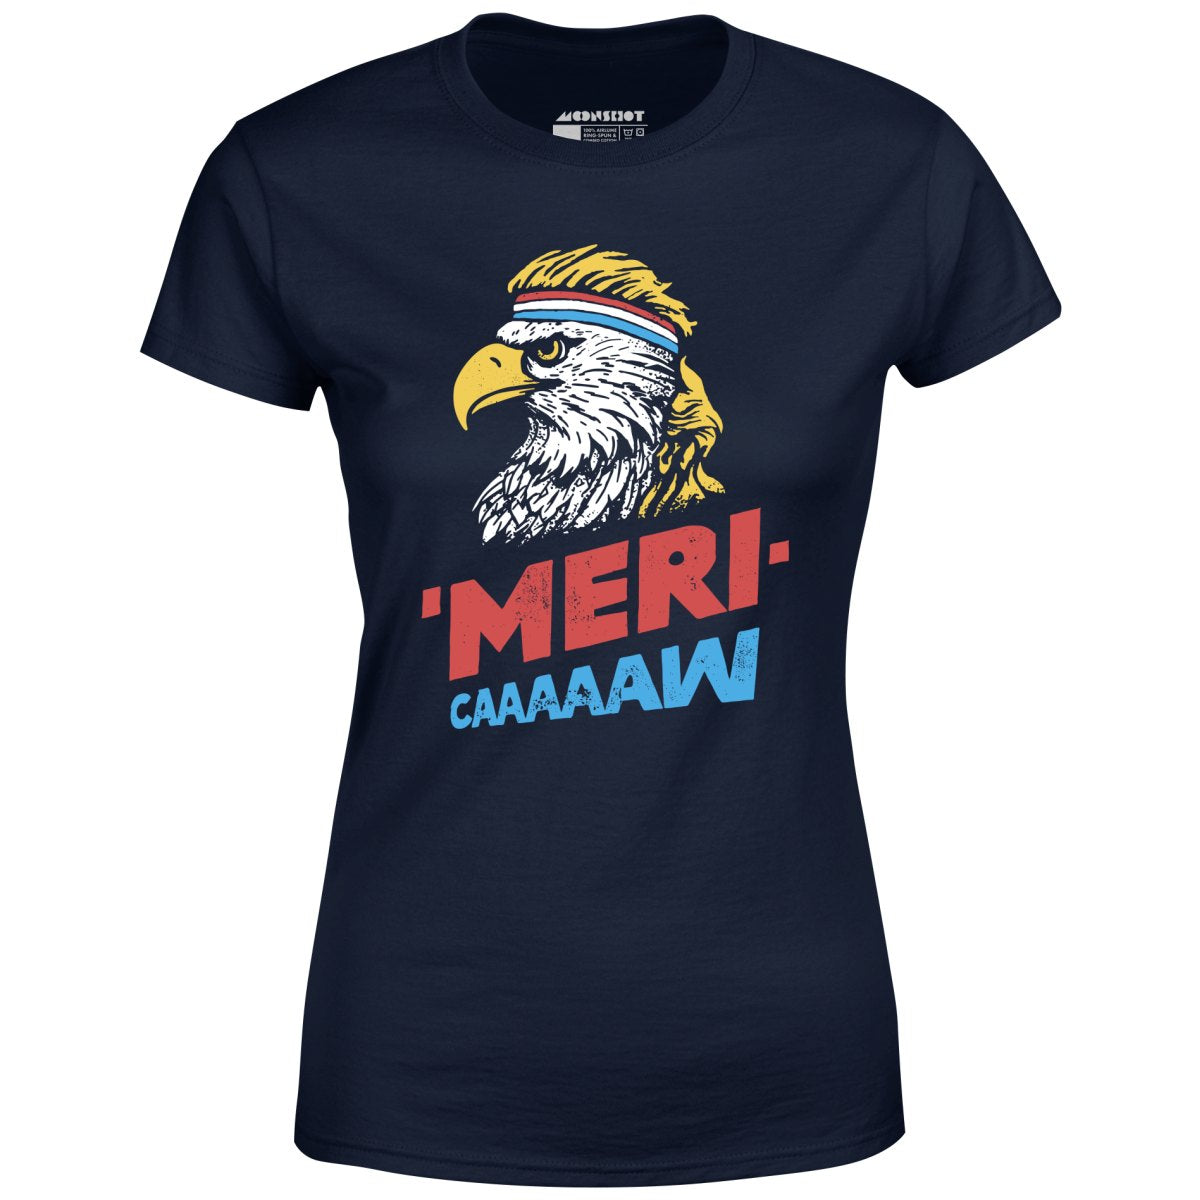 Meri-caaaaaw - Women's T-Shirt